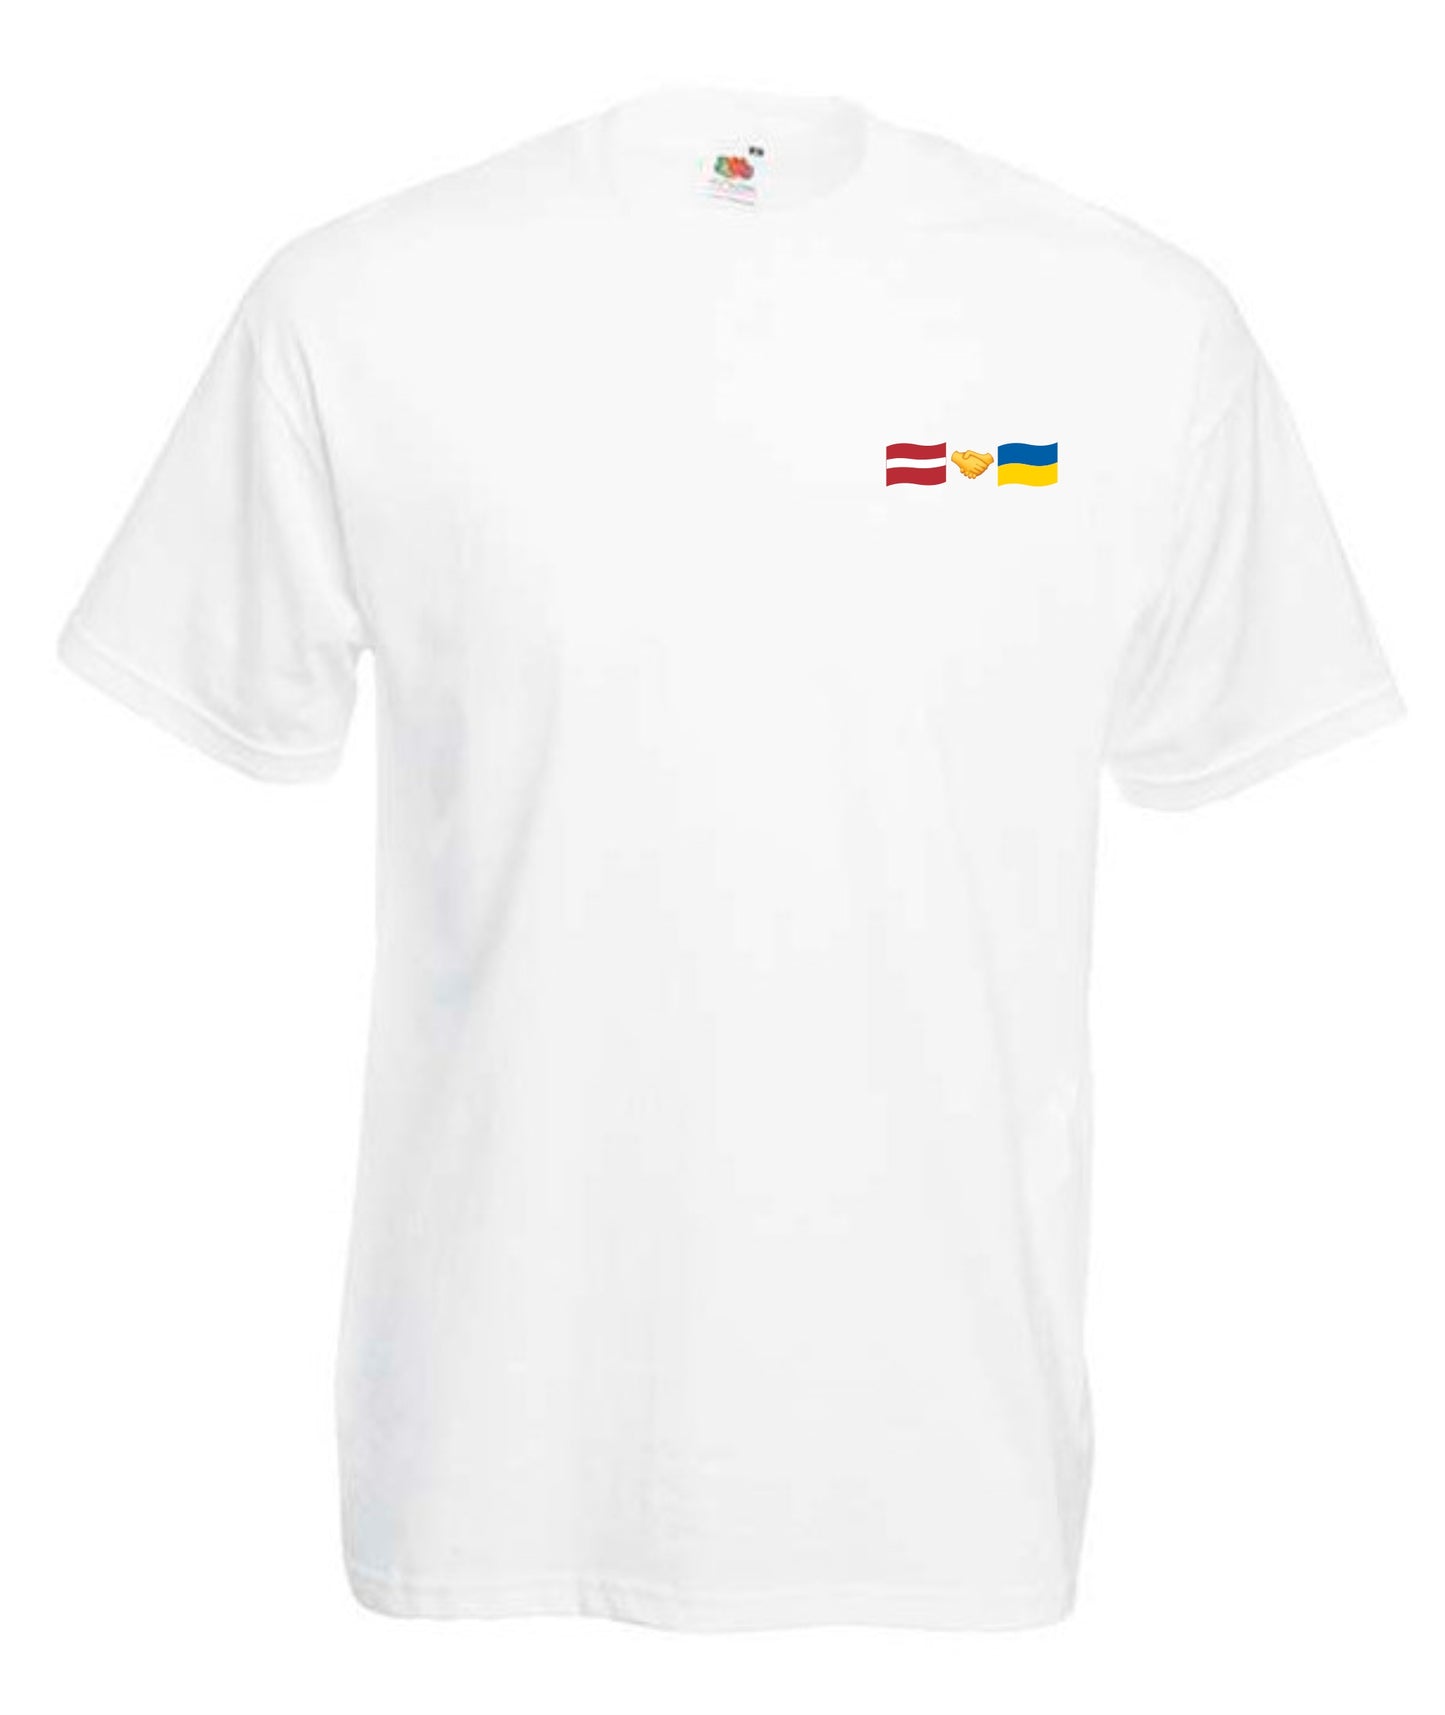 T-shirt Latvia + Ukraine (small logo)